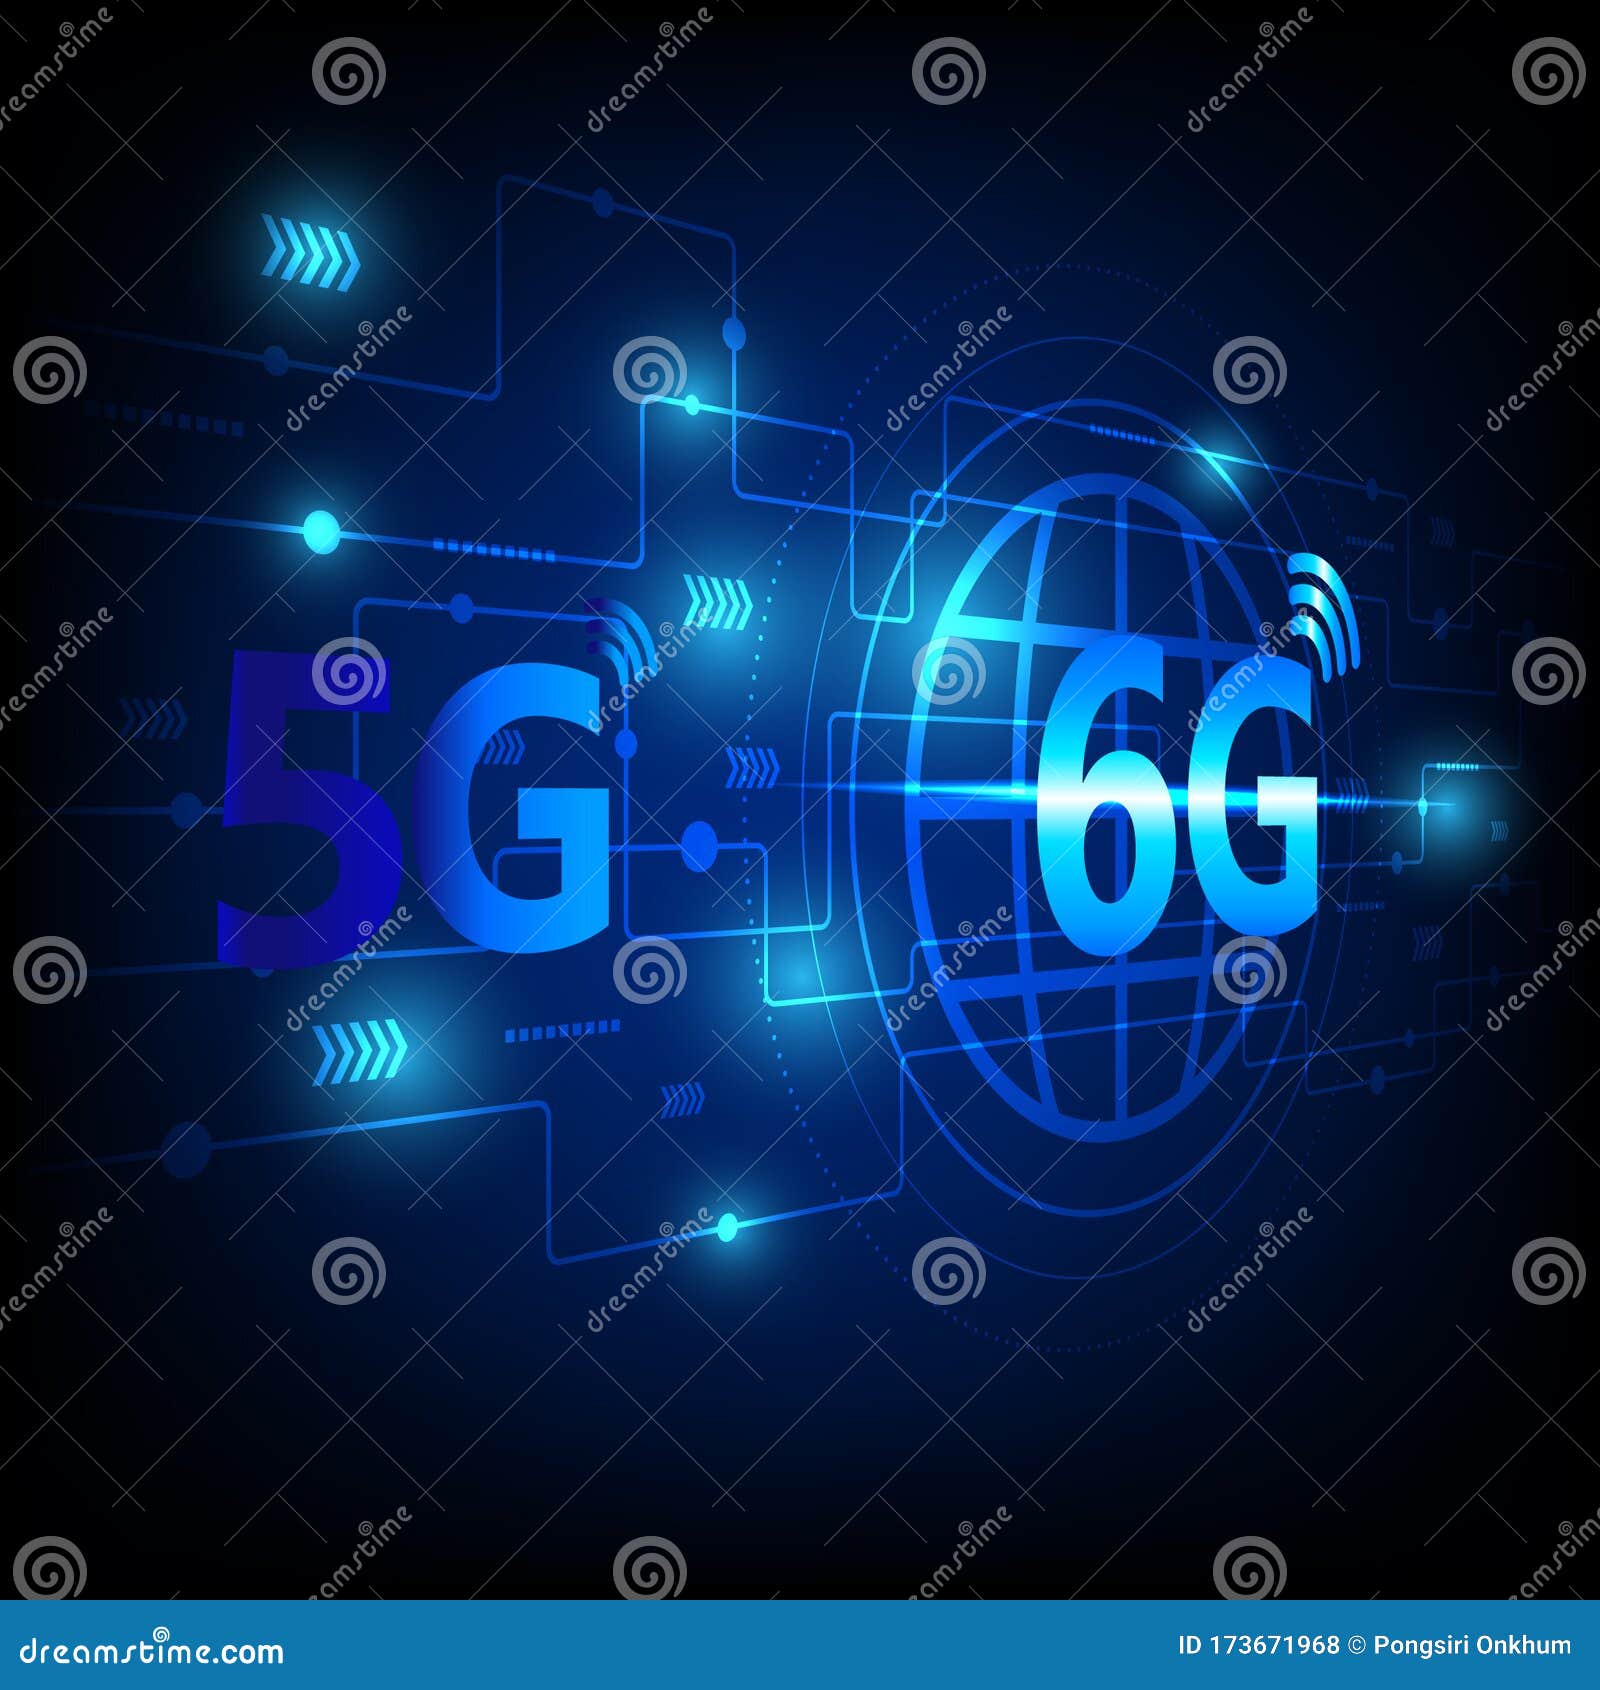 What Is 6G Internet & What Will It Look Like? | HighSpeedInternet.com